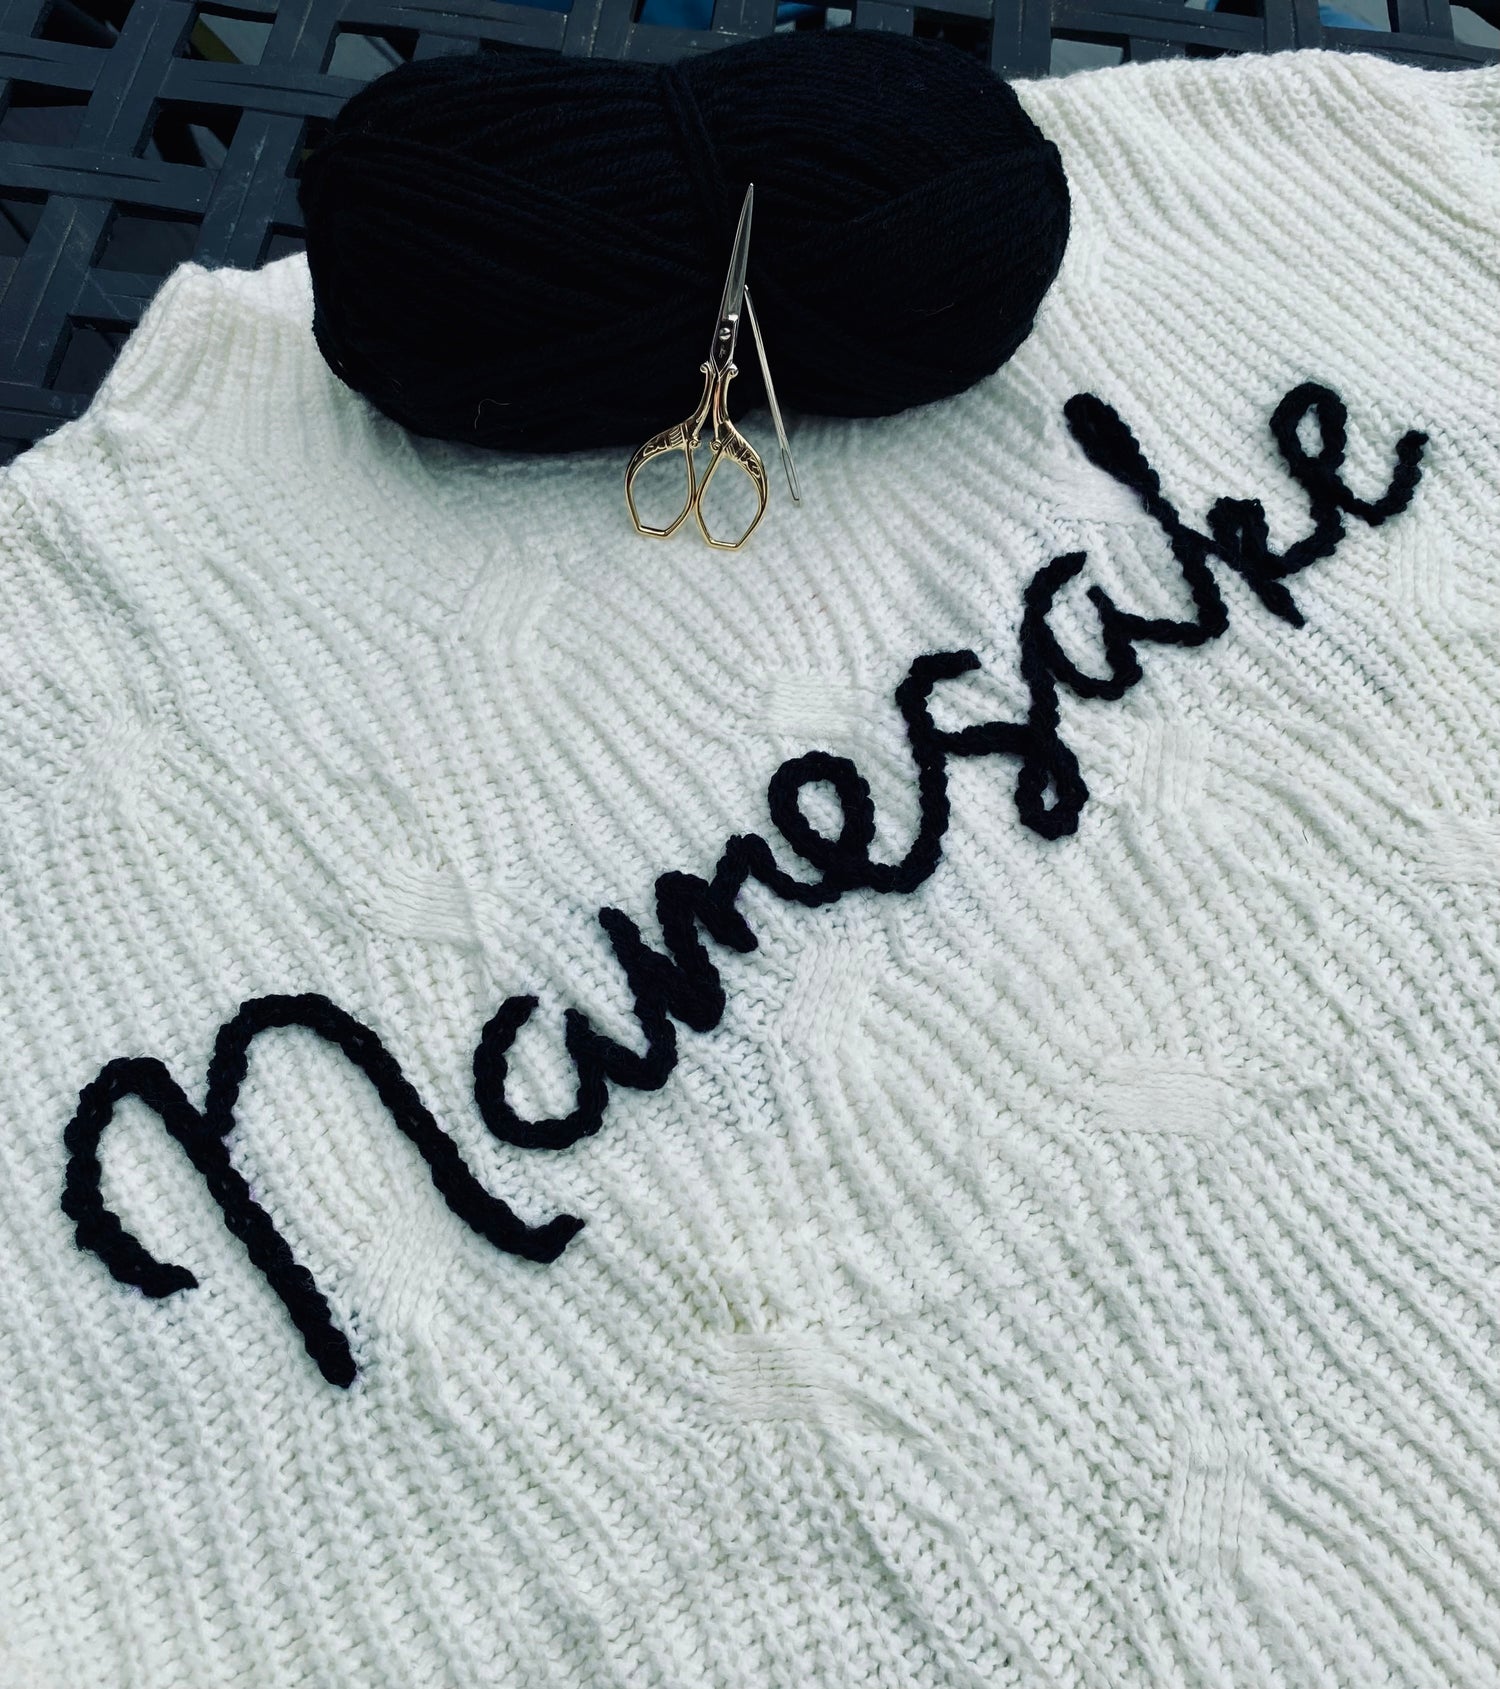 White Namesake sweater embroidered with black yarn